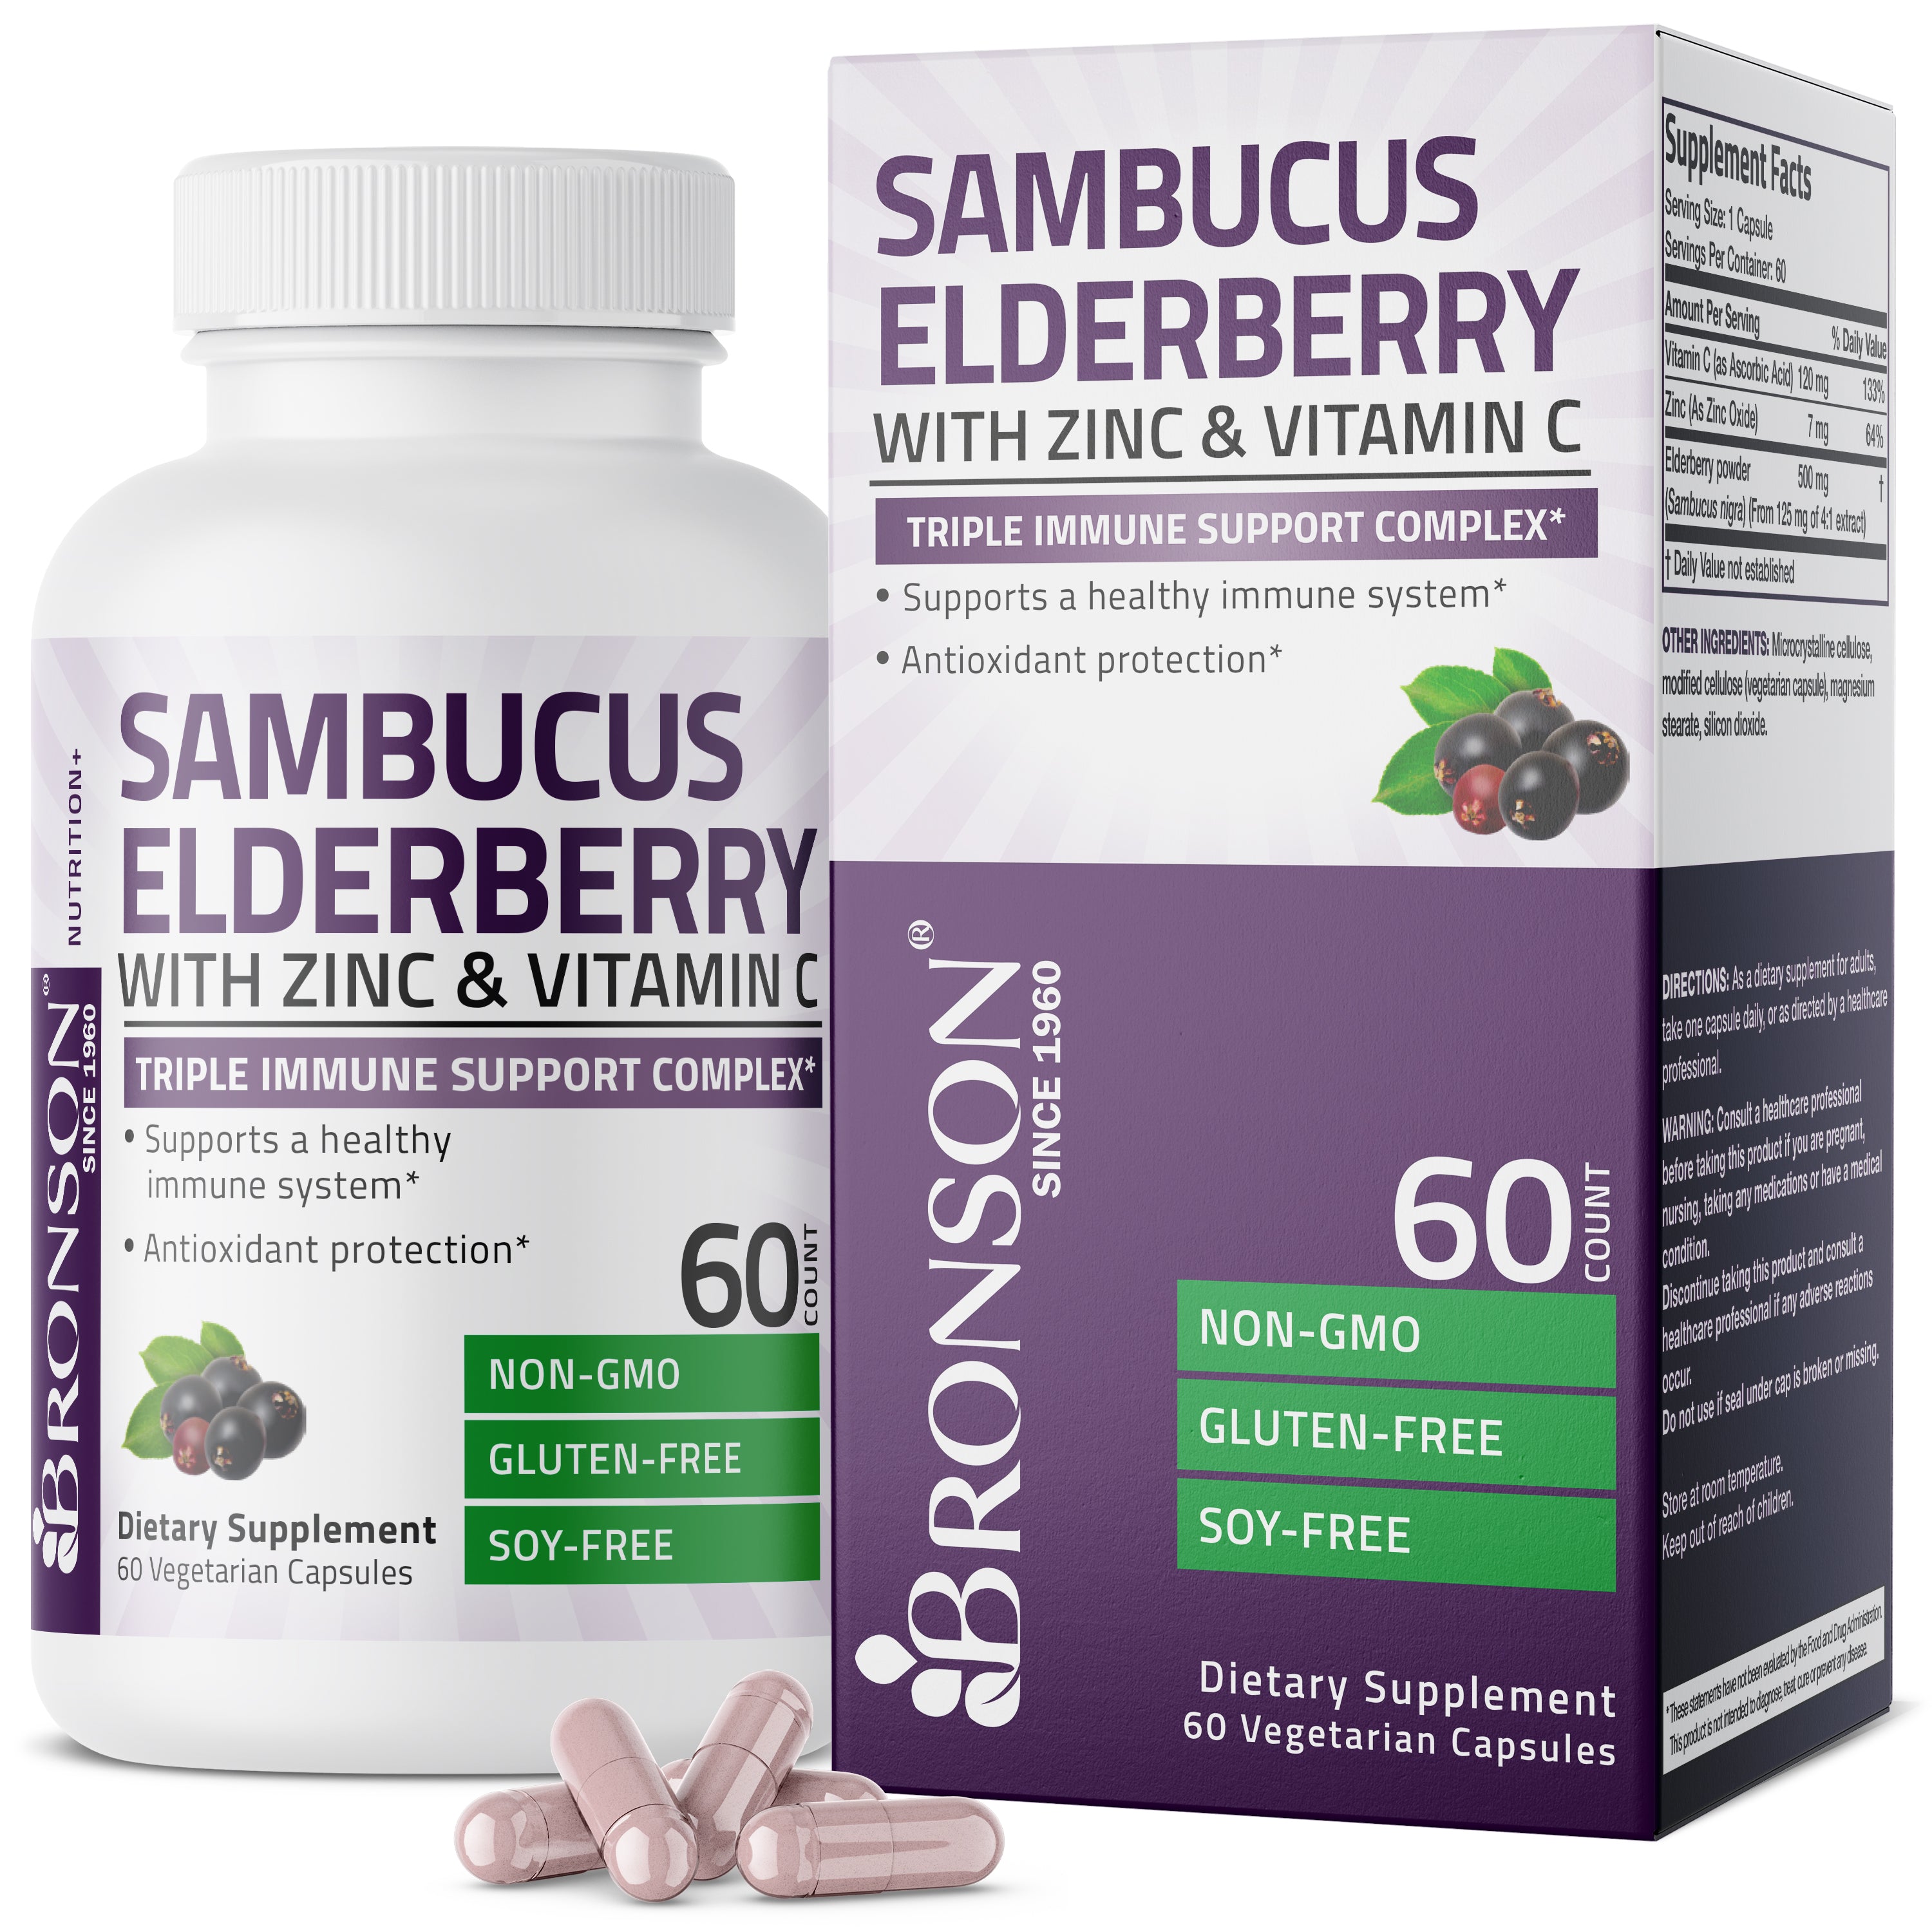 Sambucus Elderberry with Zinc & Vitamin C - 60 Vegetarian Capsules view 1 of 7